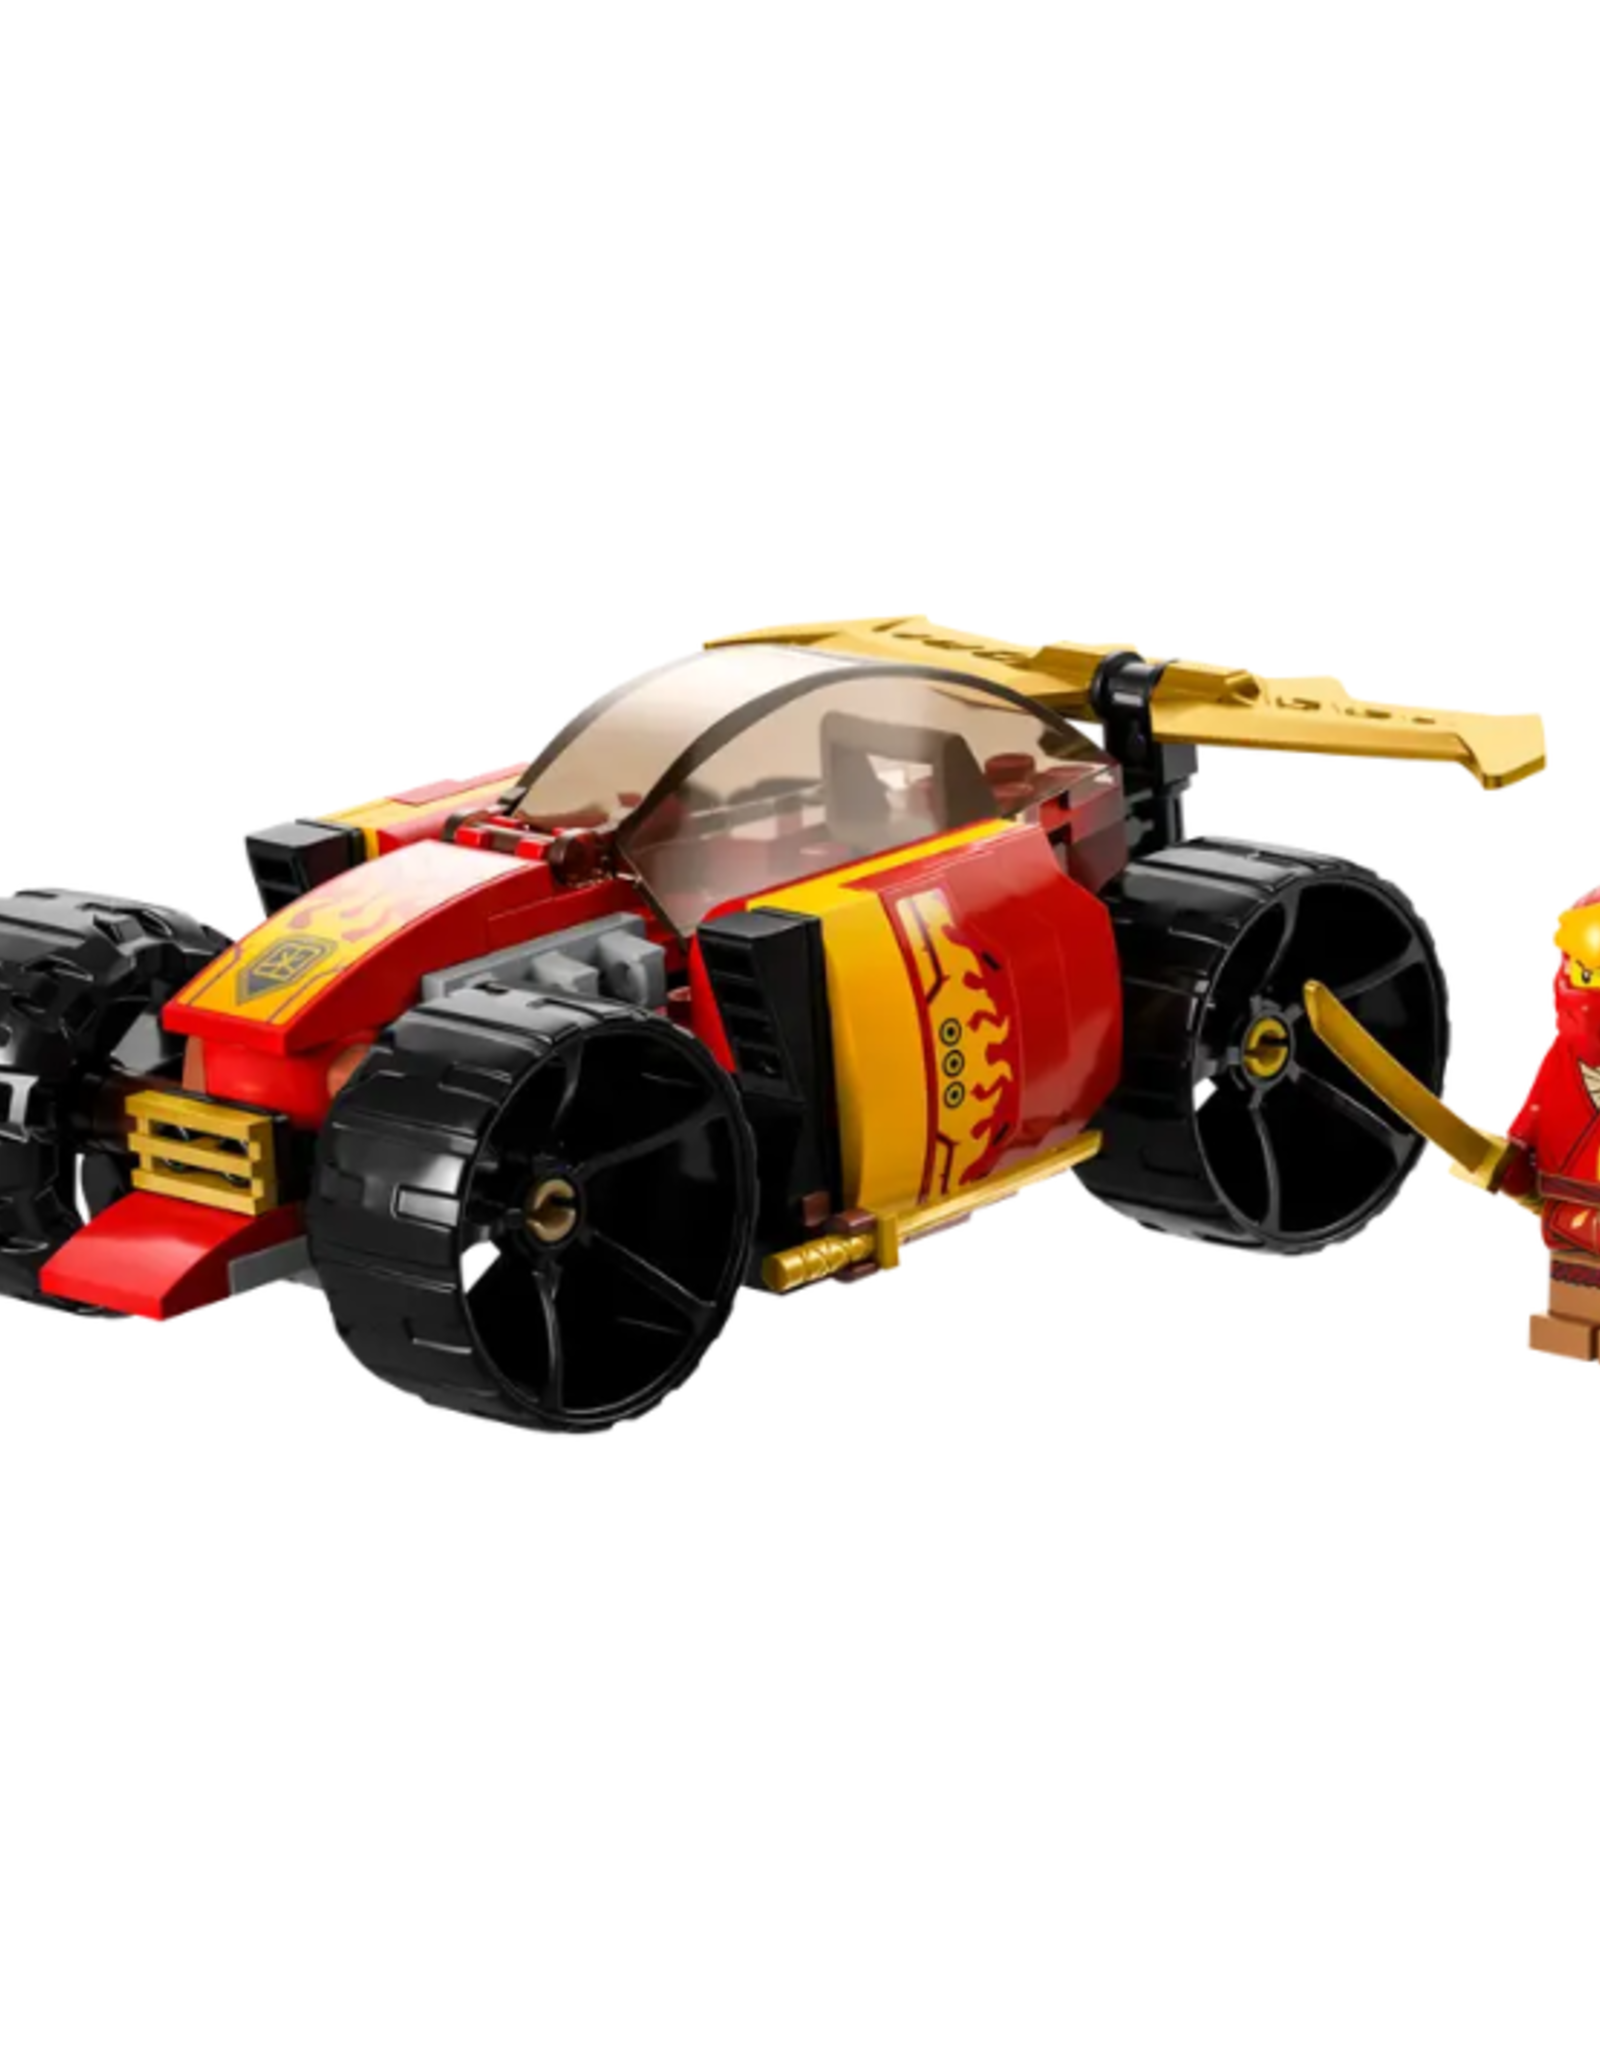 Lego Lego - Ninjago - 71780 - Kai’s Ninja Race Car EVO